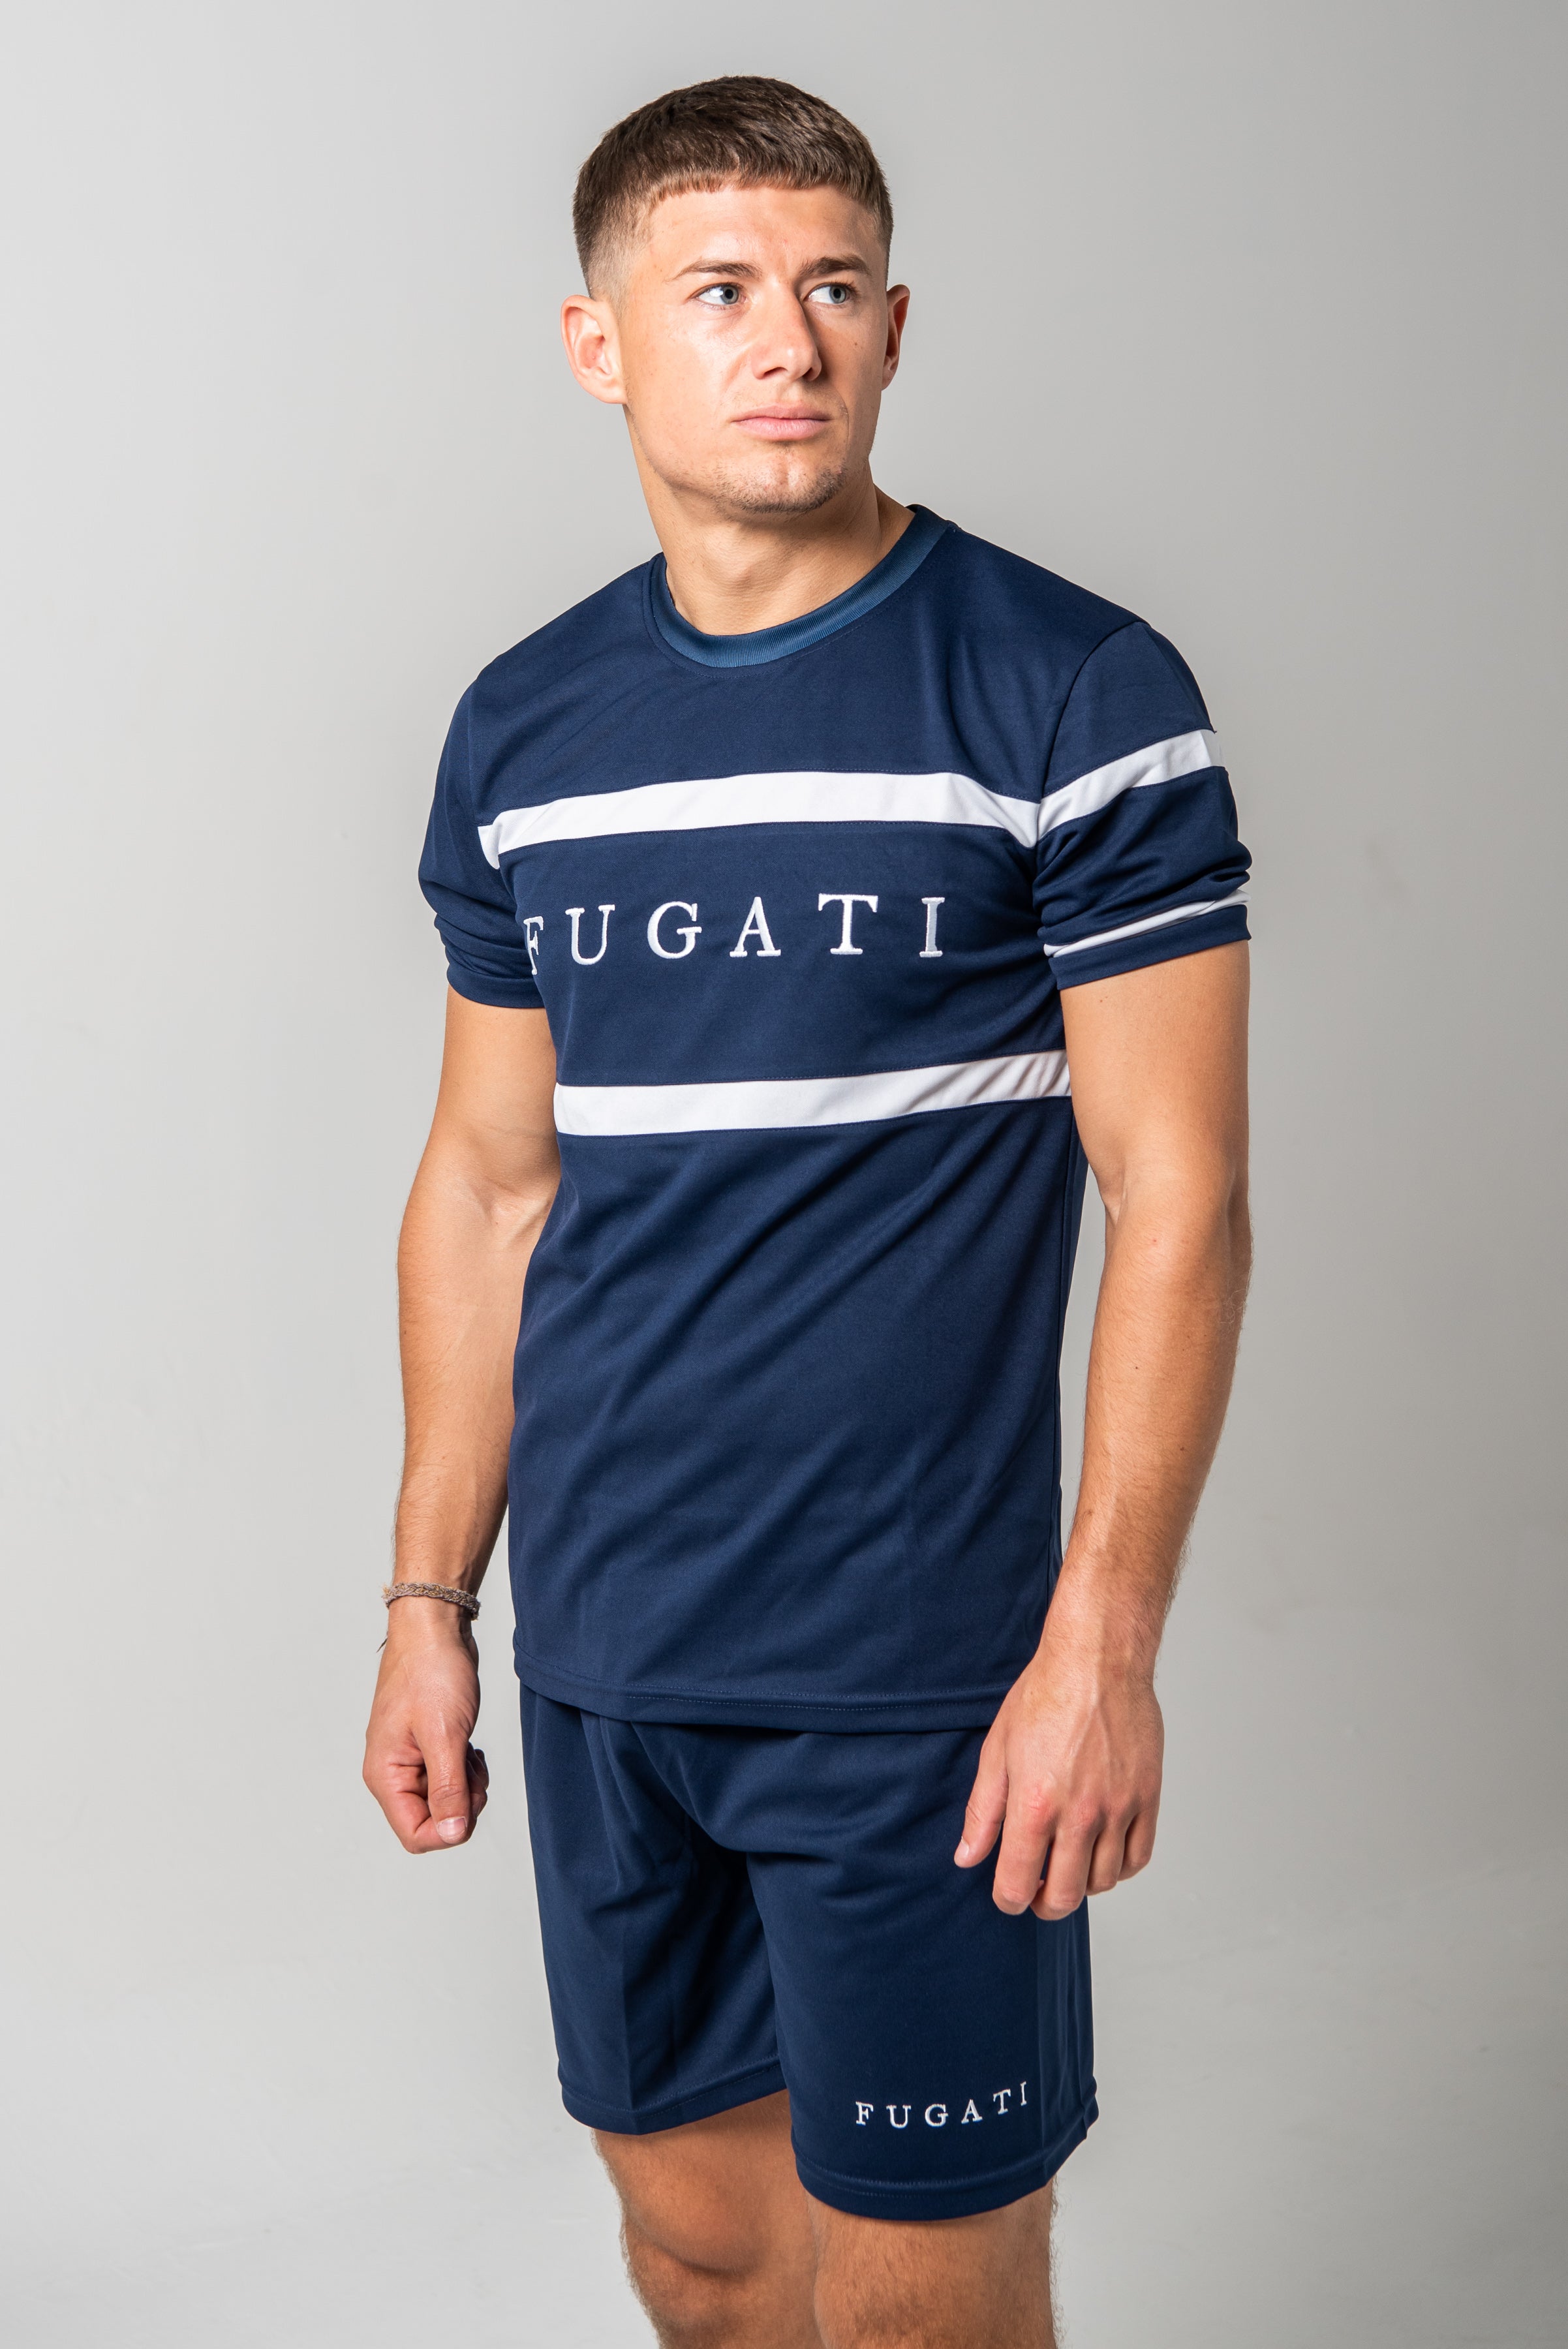 Fugati T-shirt - Navy